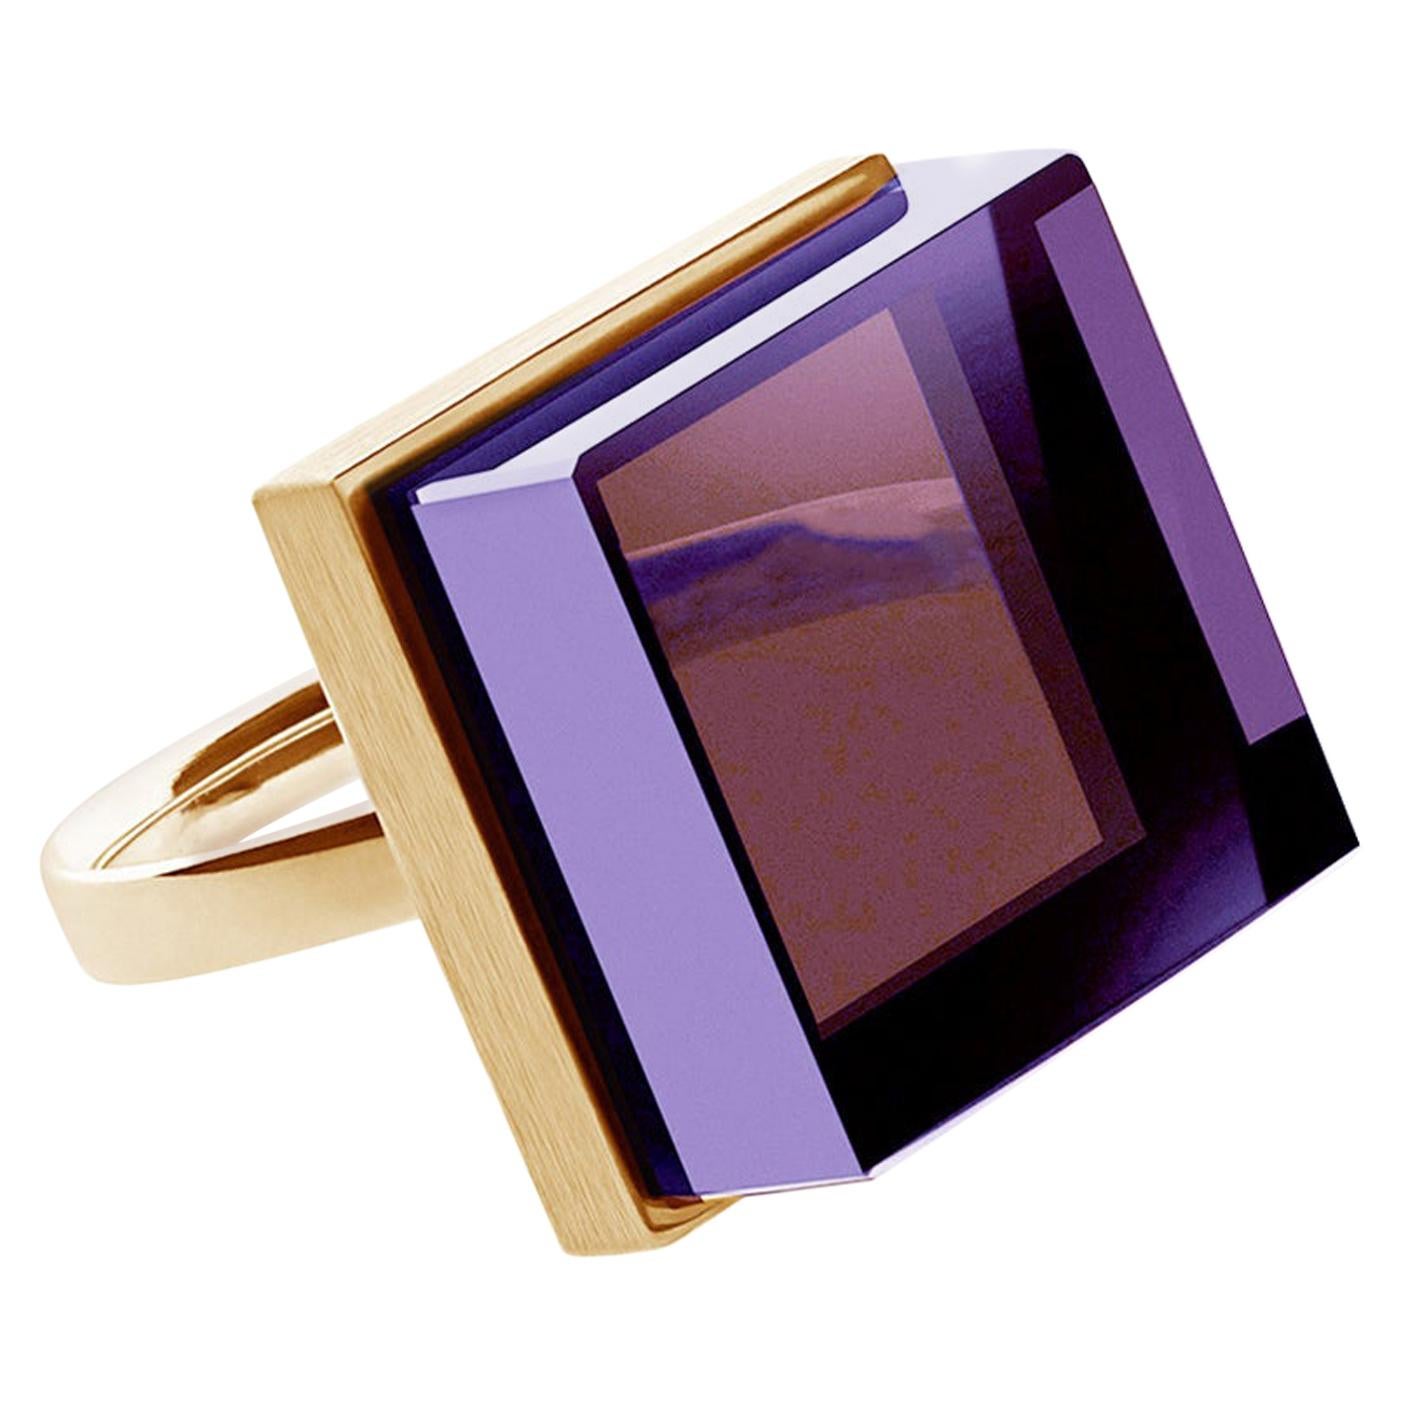 Eighteen Karat Rose Gold Art Deco Style Ring with Amethyst